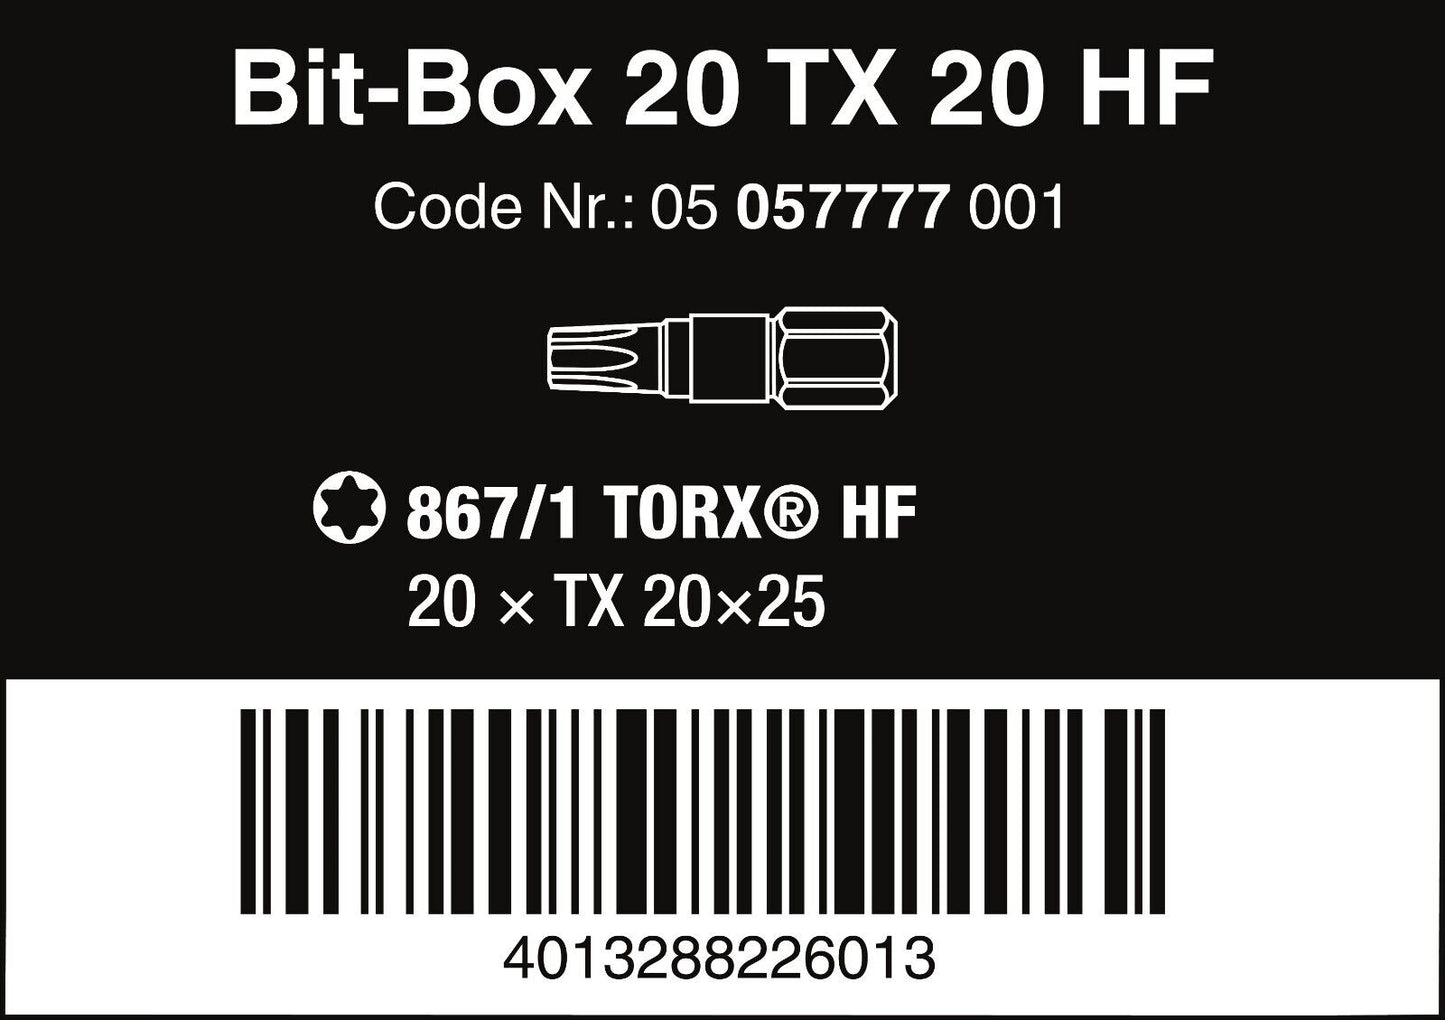 Wera Bit-Box 20 TORX® HF Bits HF TX 20 x 25mm 20 Pieces 05057777001